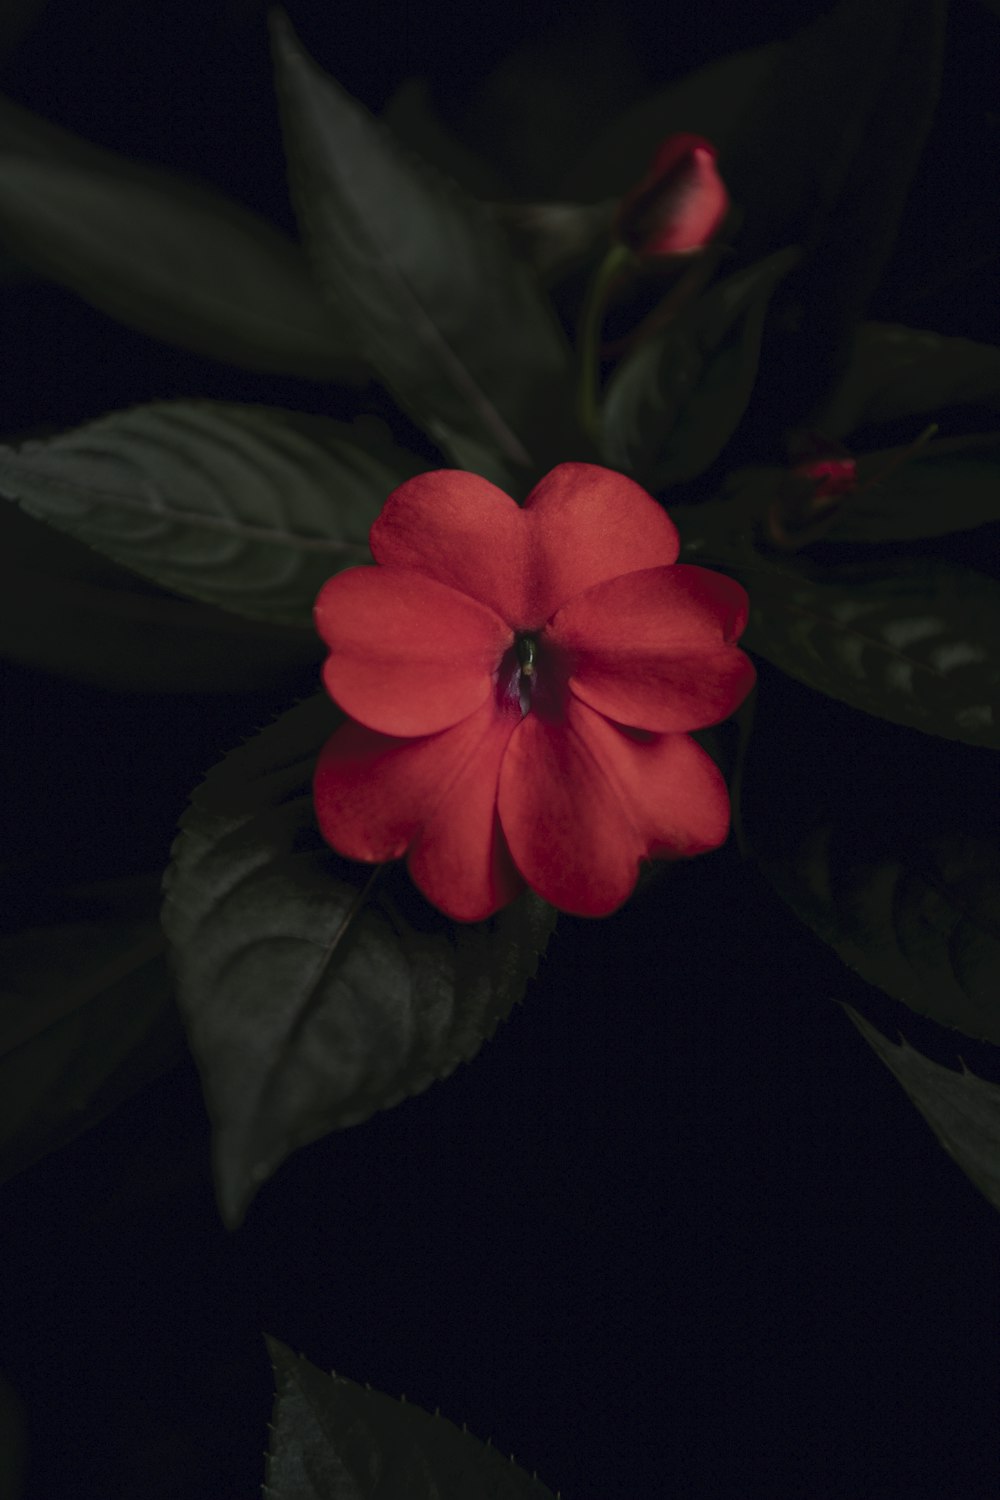 red 5 petal flower in black background